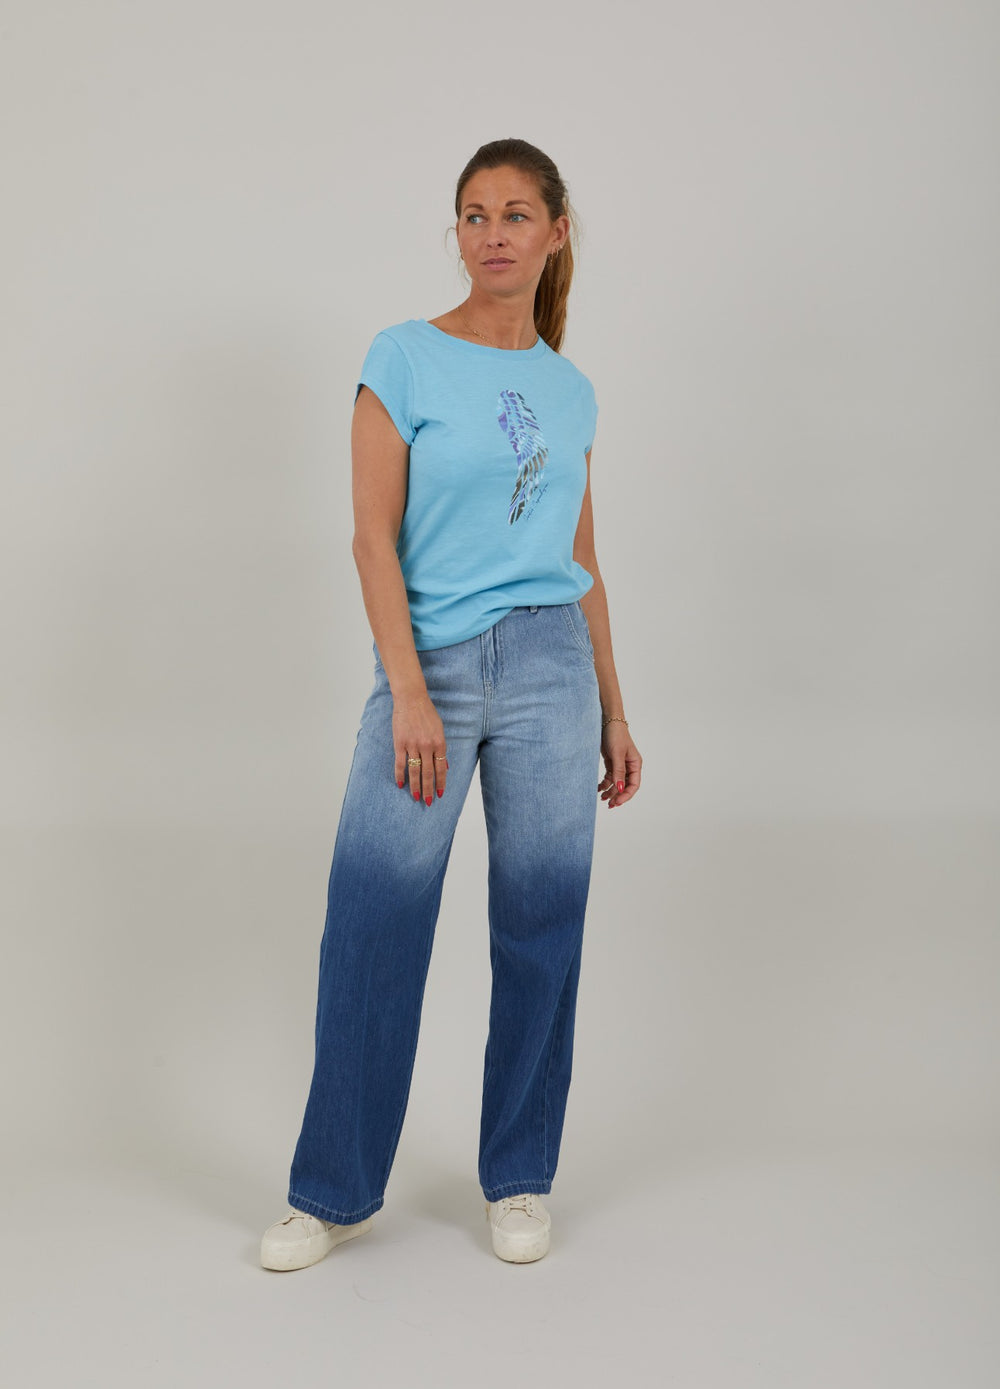 Coster Copenhagen - Flow Wing T-shirt i Coastal Blue